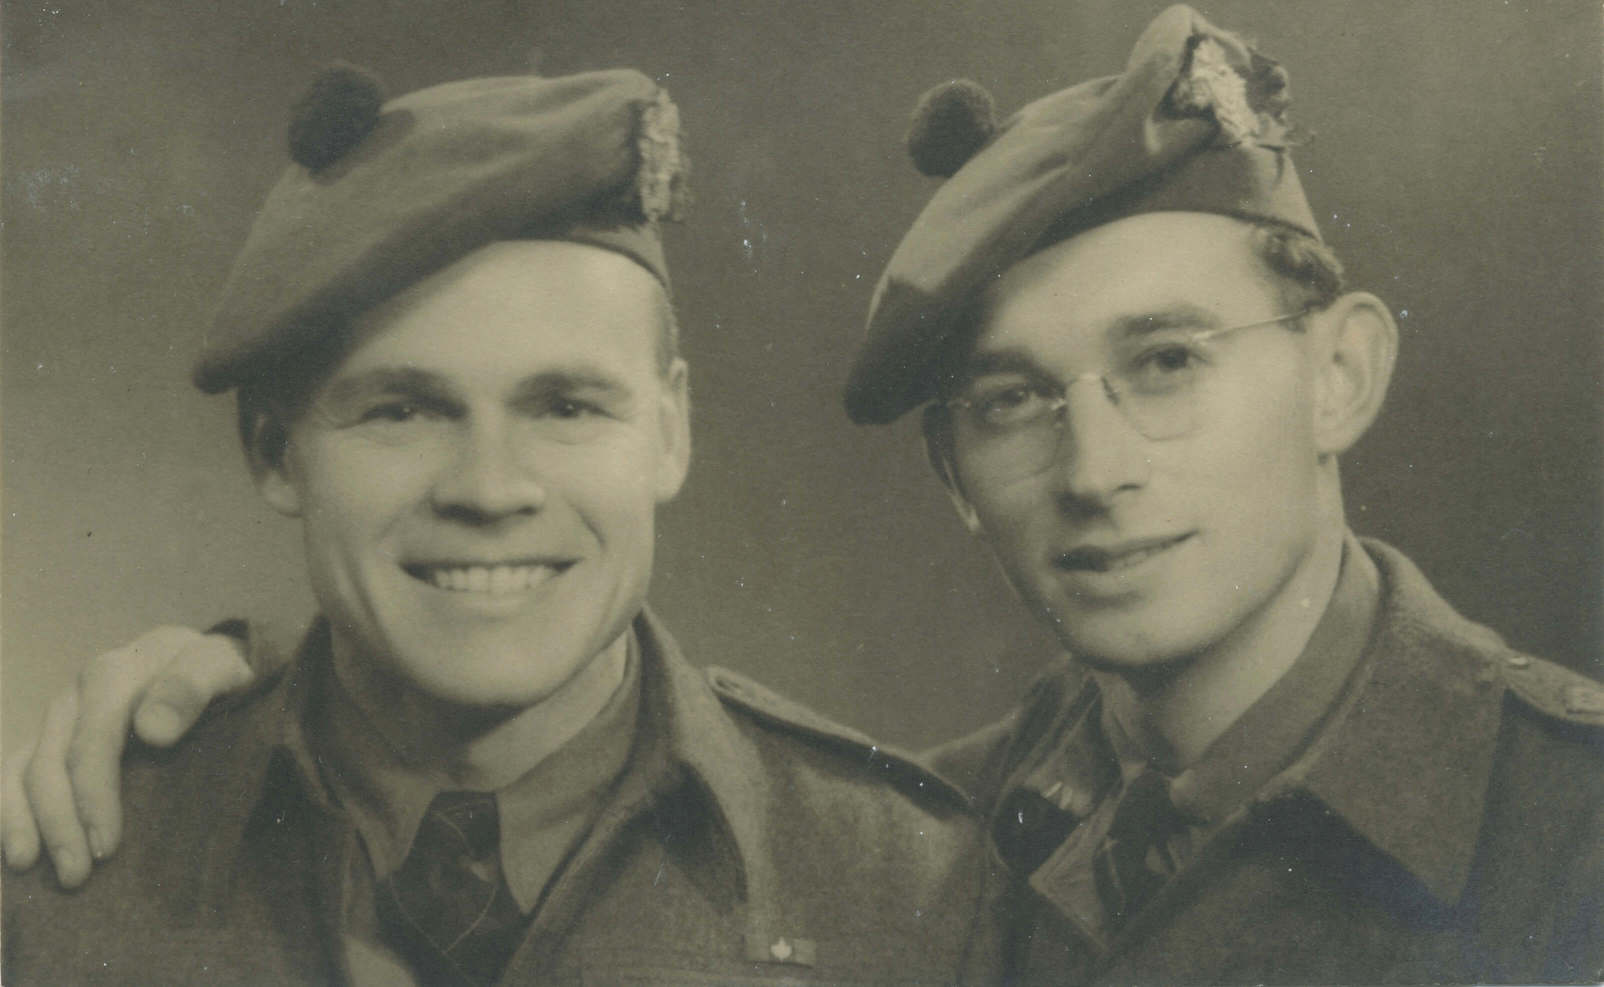 Brussels (February 1945)
Capt. G.W. Pollard & Capt. Eric Isener